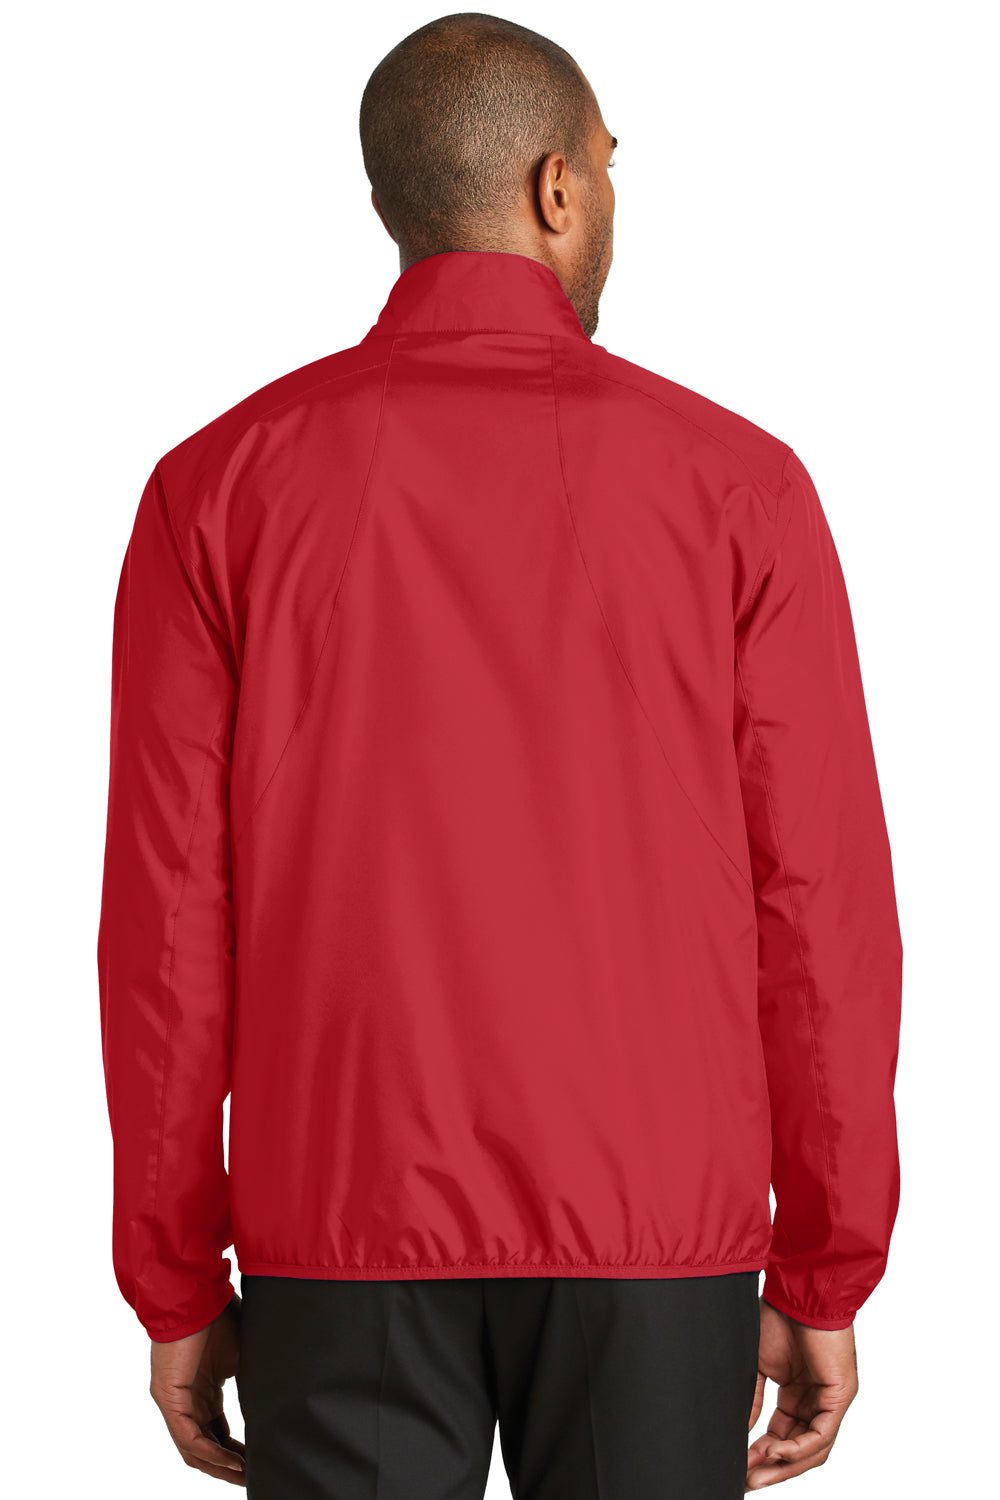 Port Authority J344 Mens Zephyr Wind & Water Resistant Full Zip Jacket Red Back